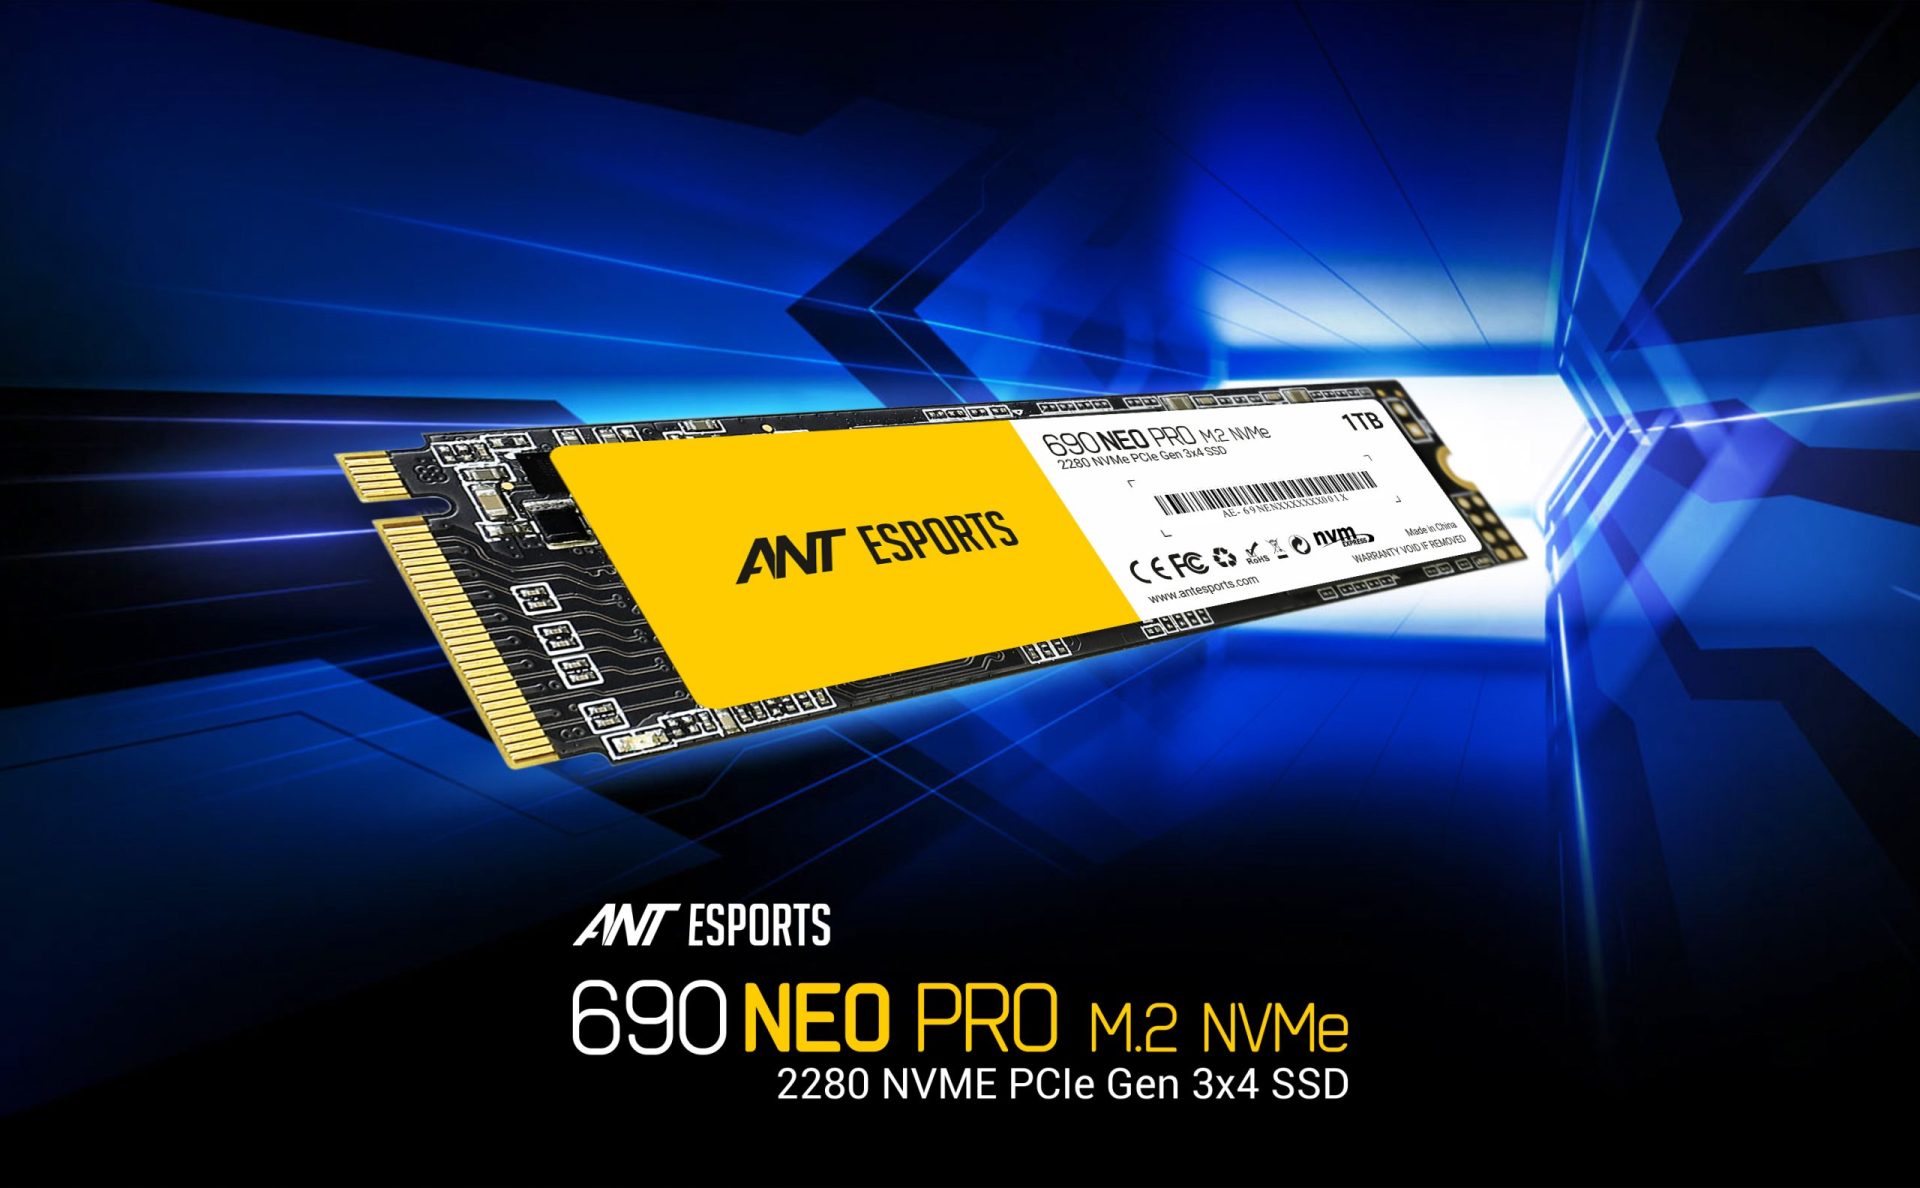 Ant Esports 690 Neo Sata 2.5 128 GB SSD - ANT E-SPORTS